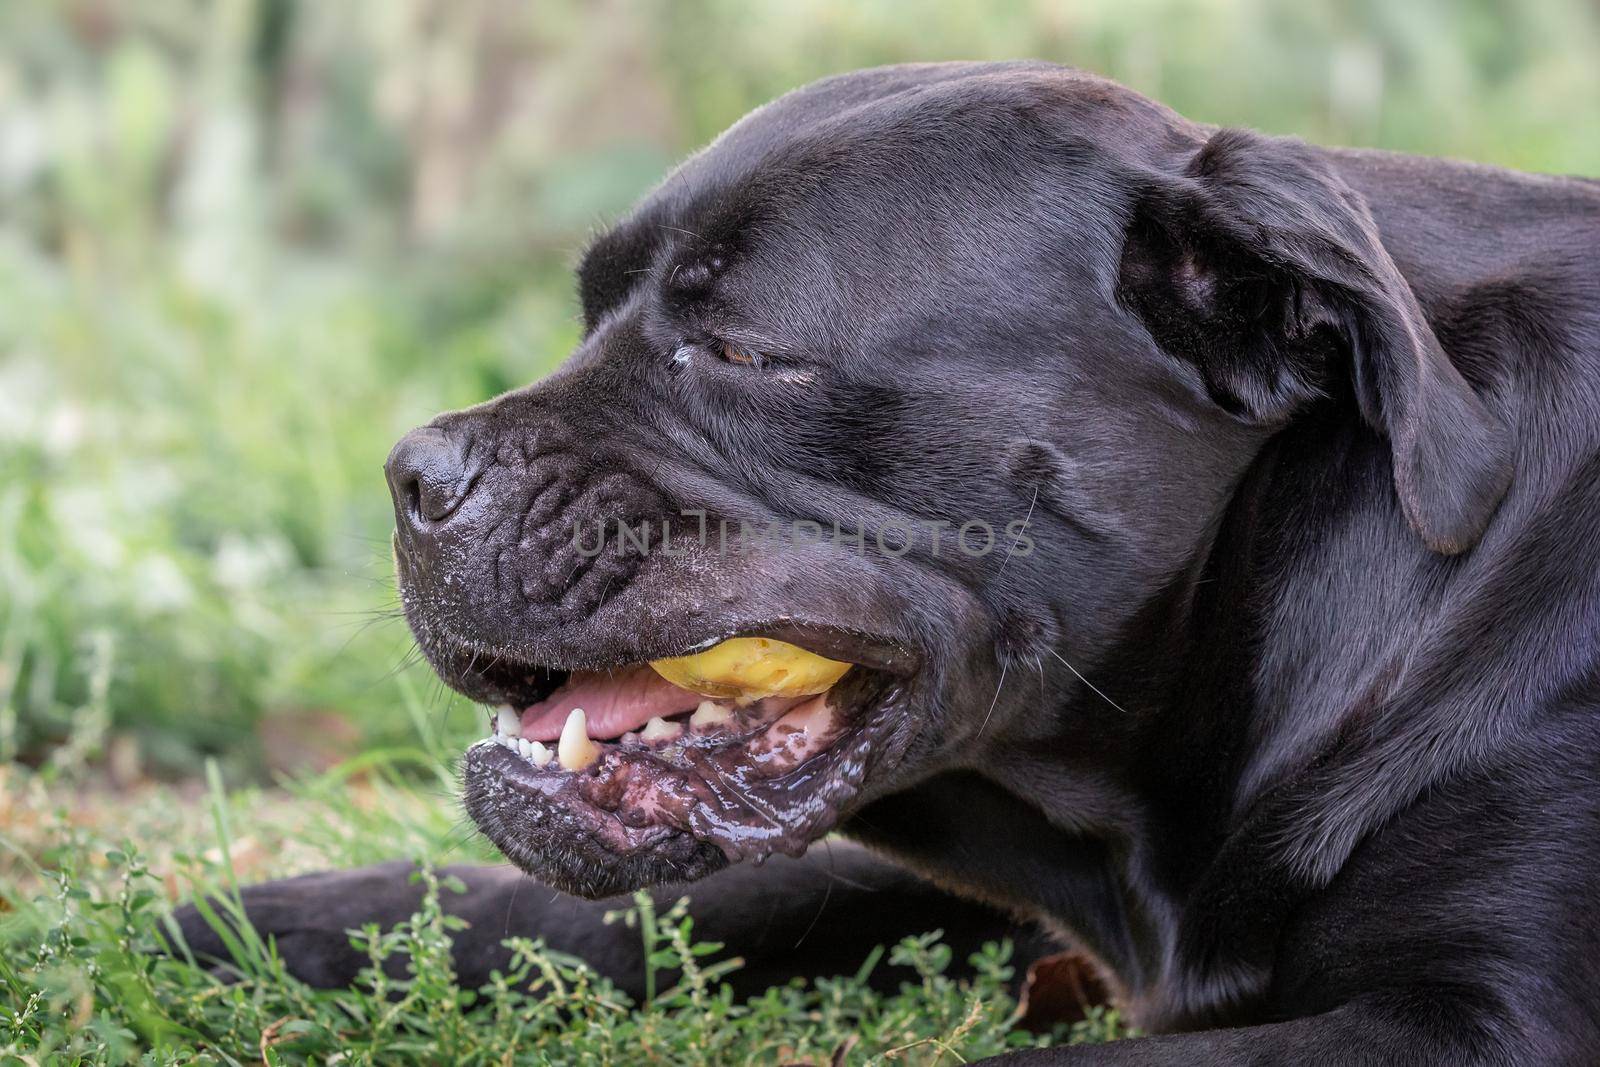 Black cane corso dog lie on the grass and cramp apple by Lincikas